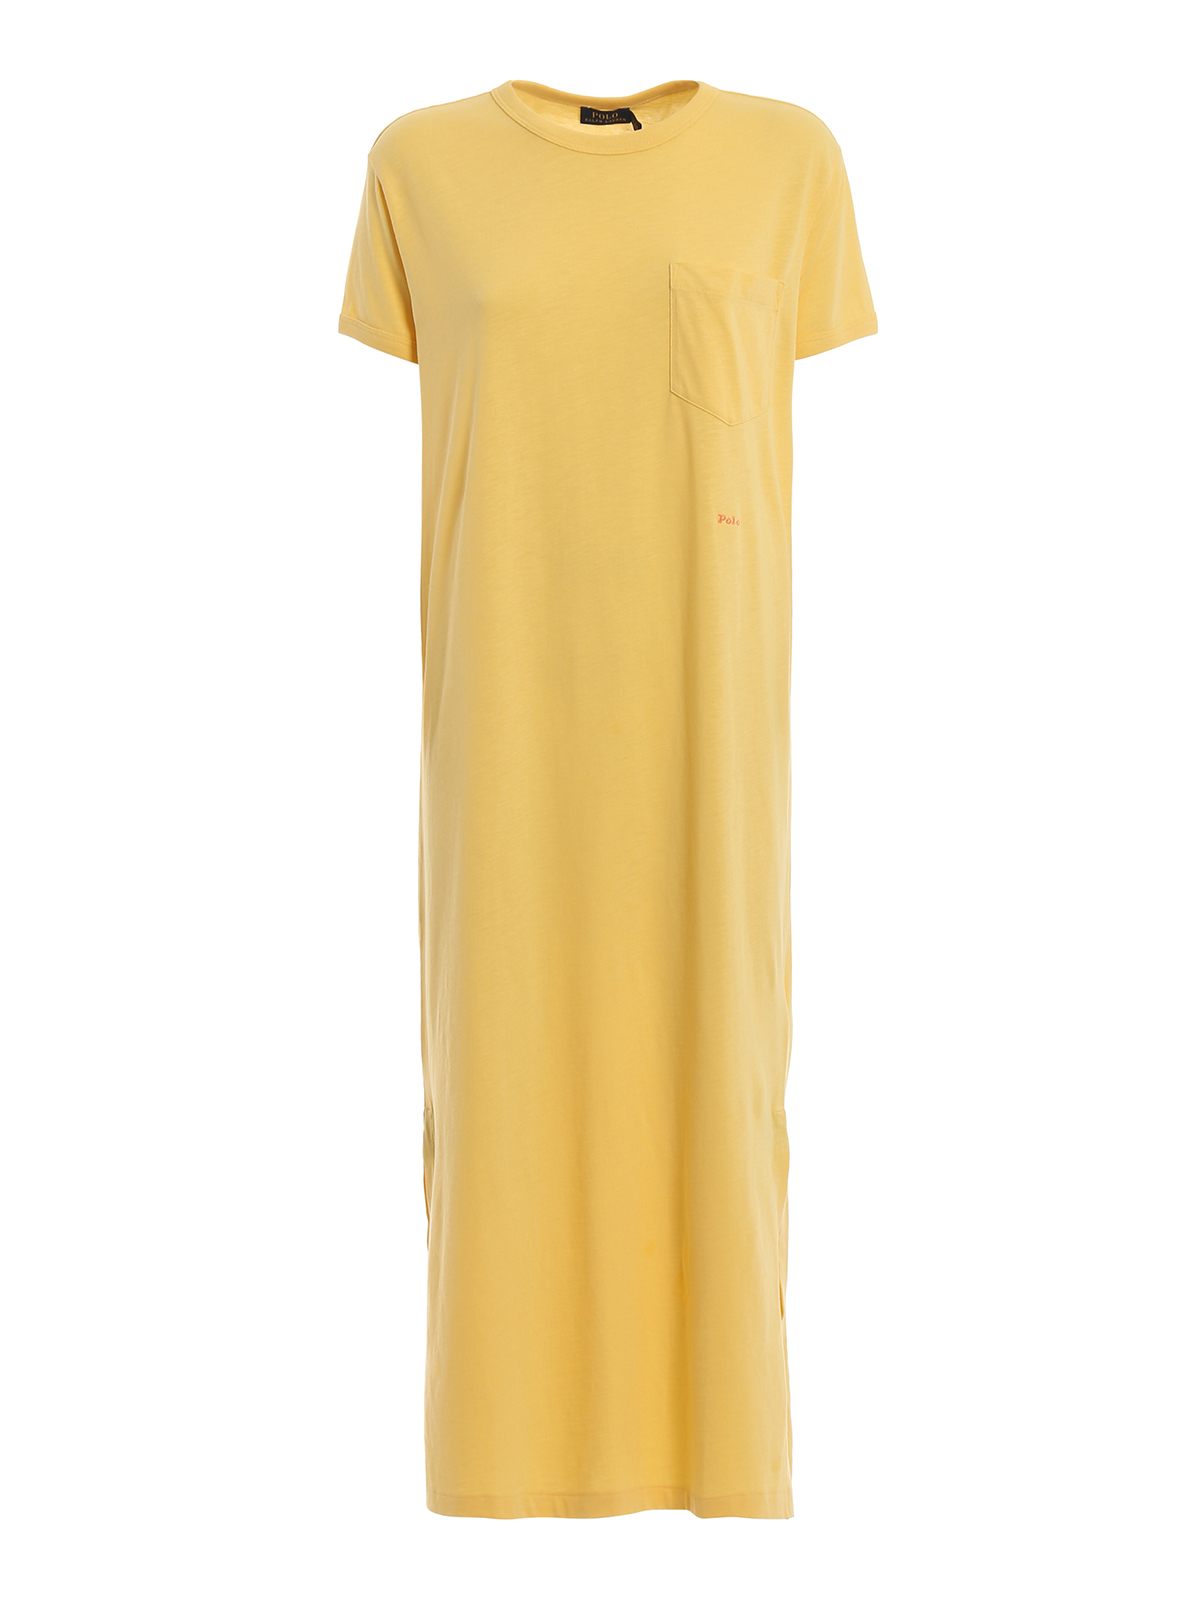 Velvet online polo ralph lauren cotton t shirt dress treated with permethrin